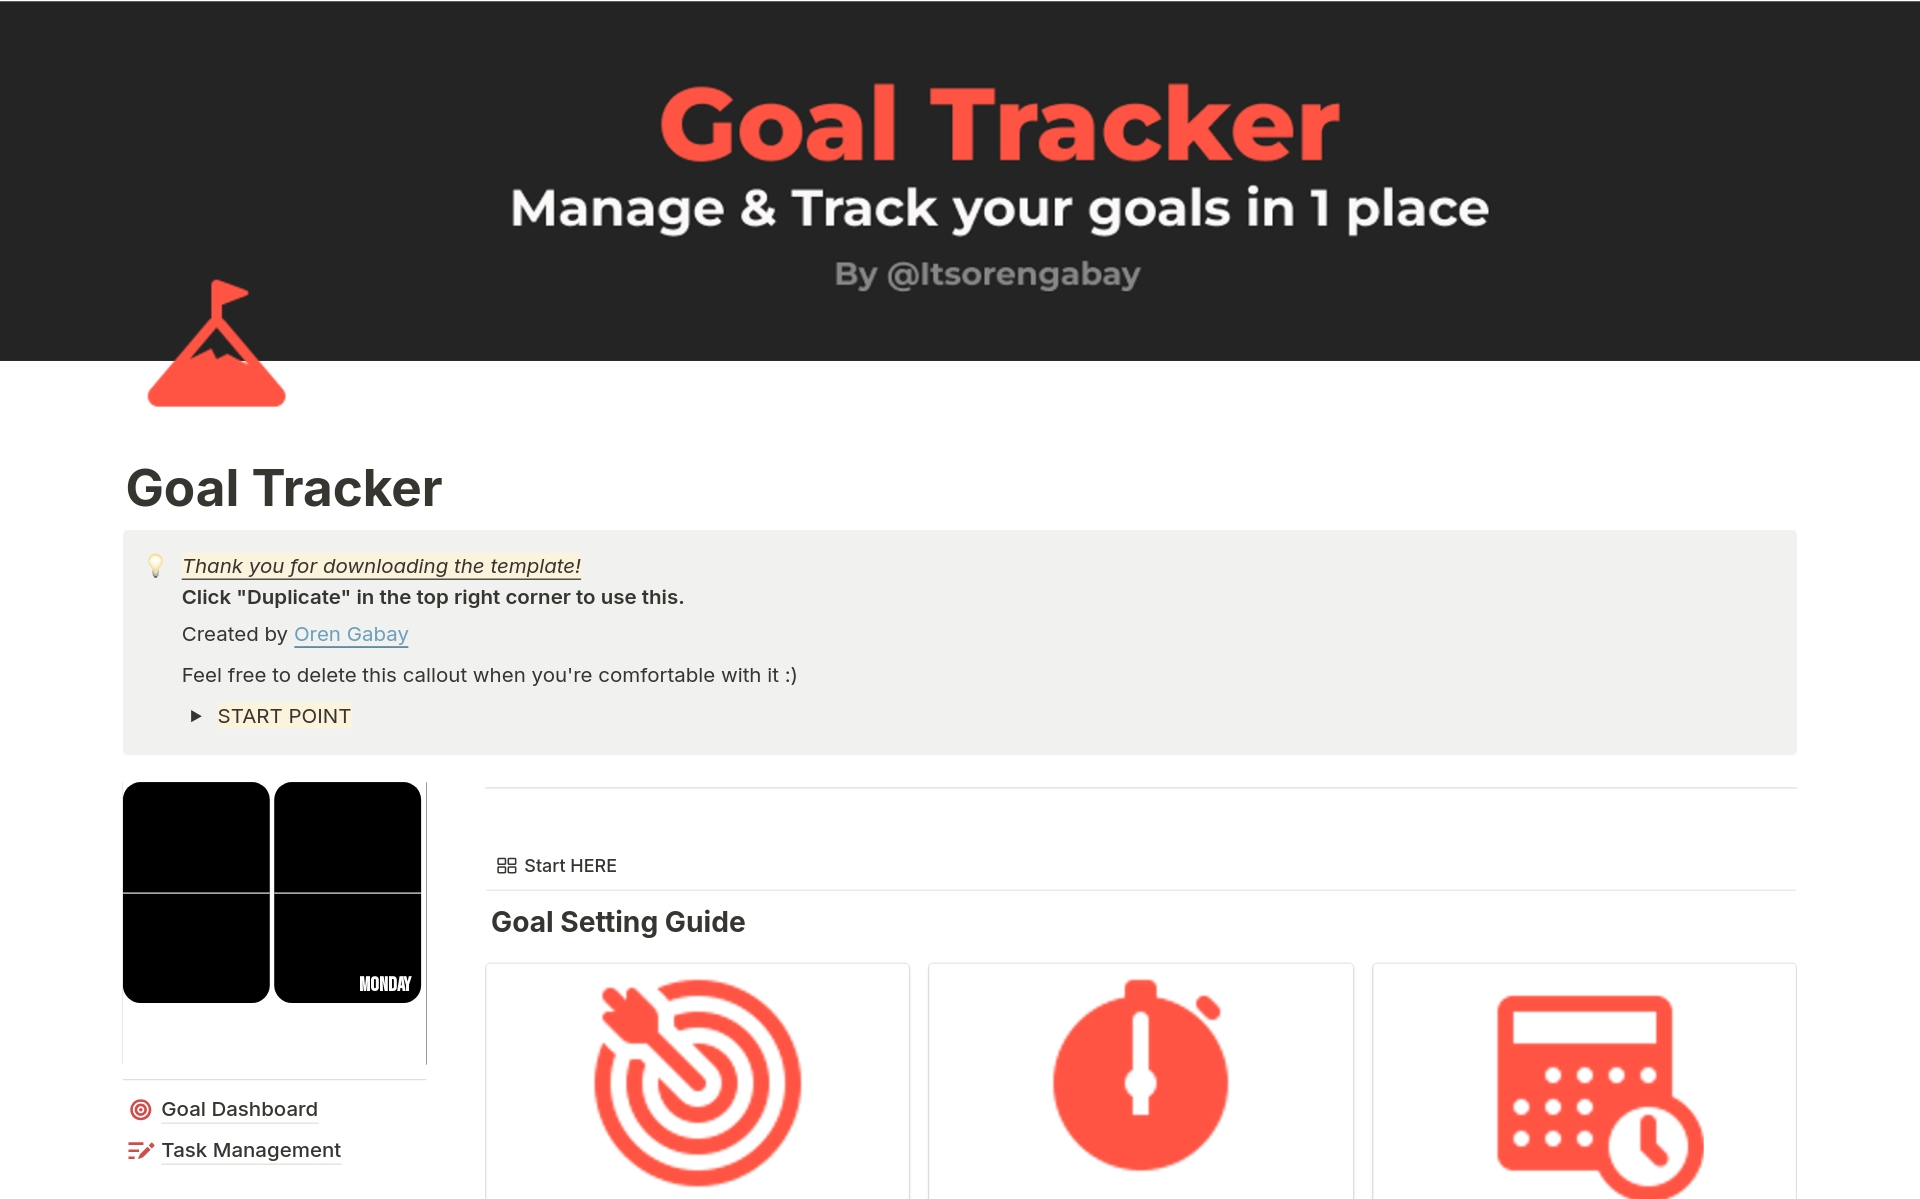 Aperçu du modèle de Goal Tracker